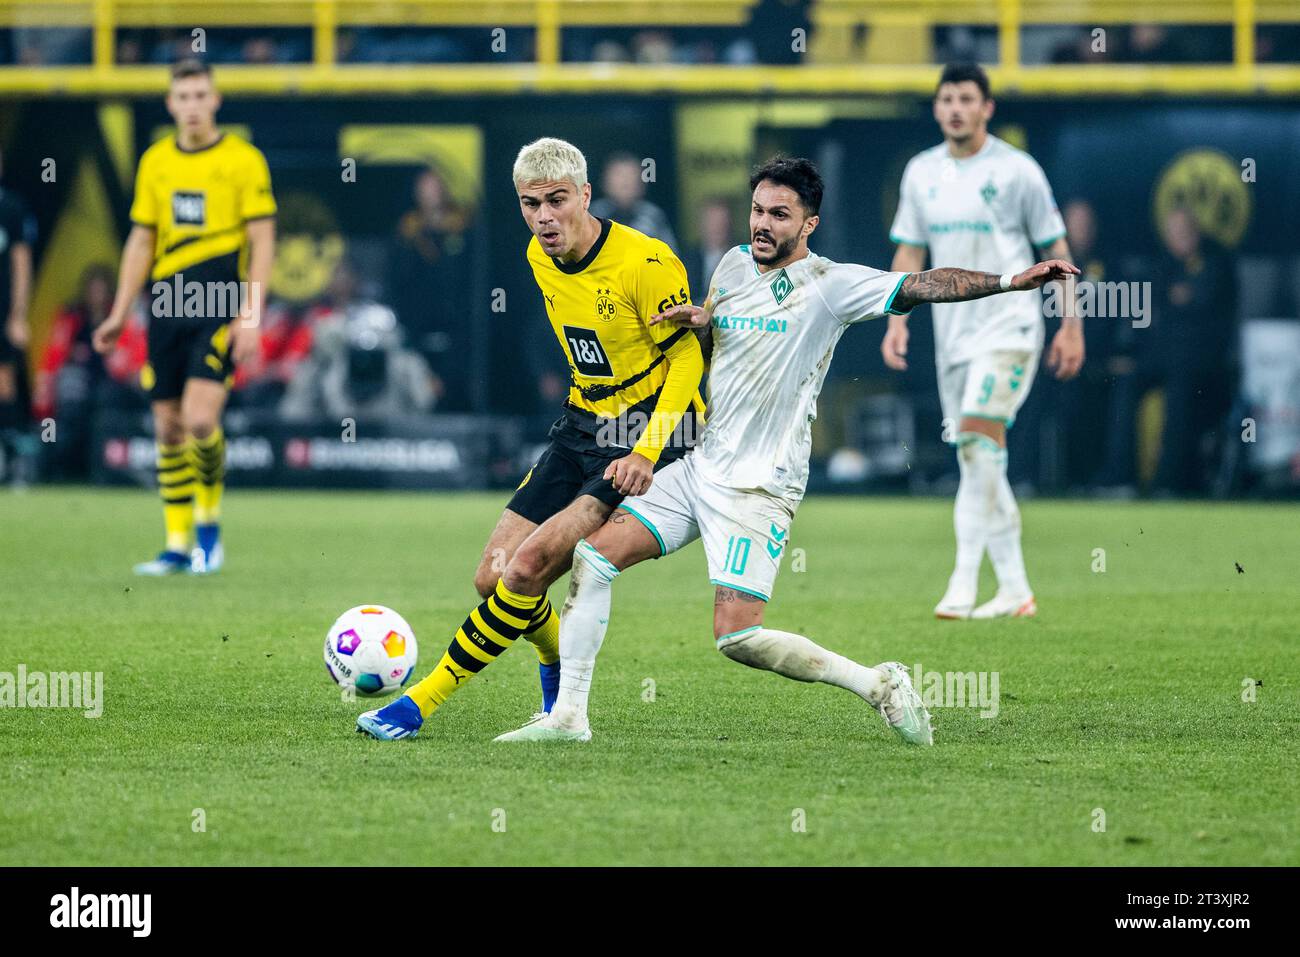 Dortmund, Signal-Iduna-Park, 20.10.23: Giovanni Reyna (Dortmund) (L) gegen Leonardo Bittencourt (Brema) am Ball beim 1. Bundesliga Spiel Borussia Dor Foto Stock